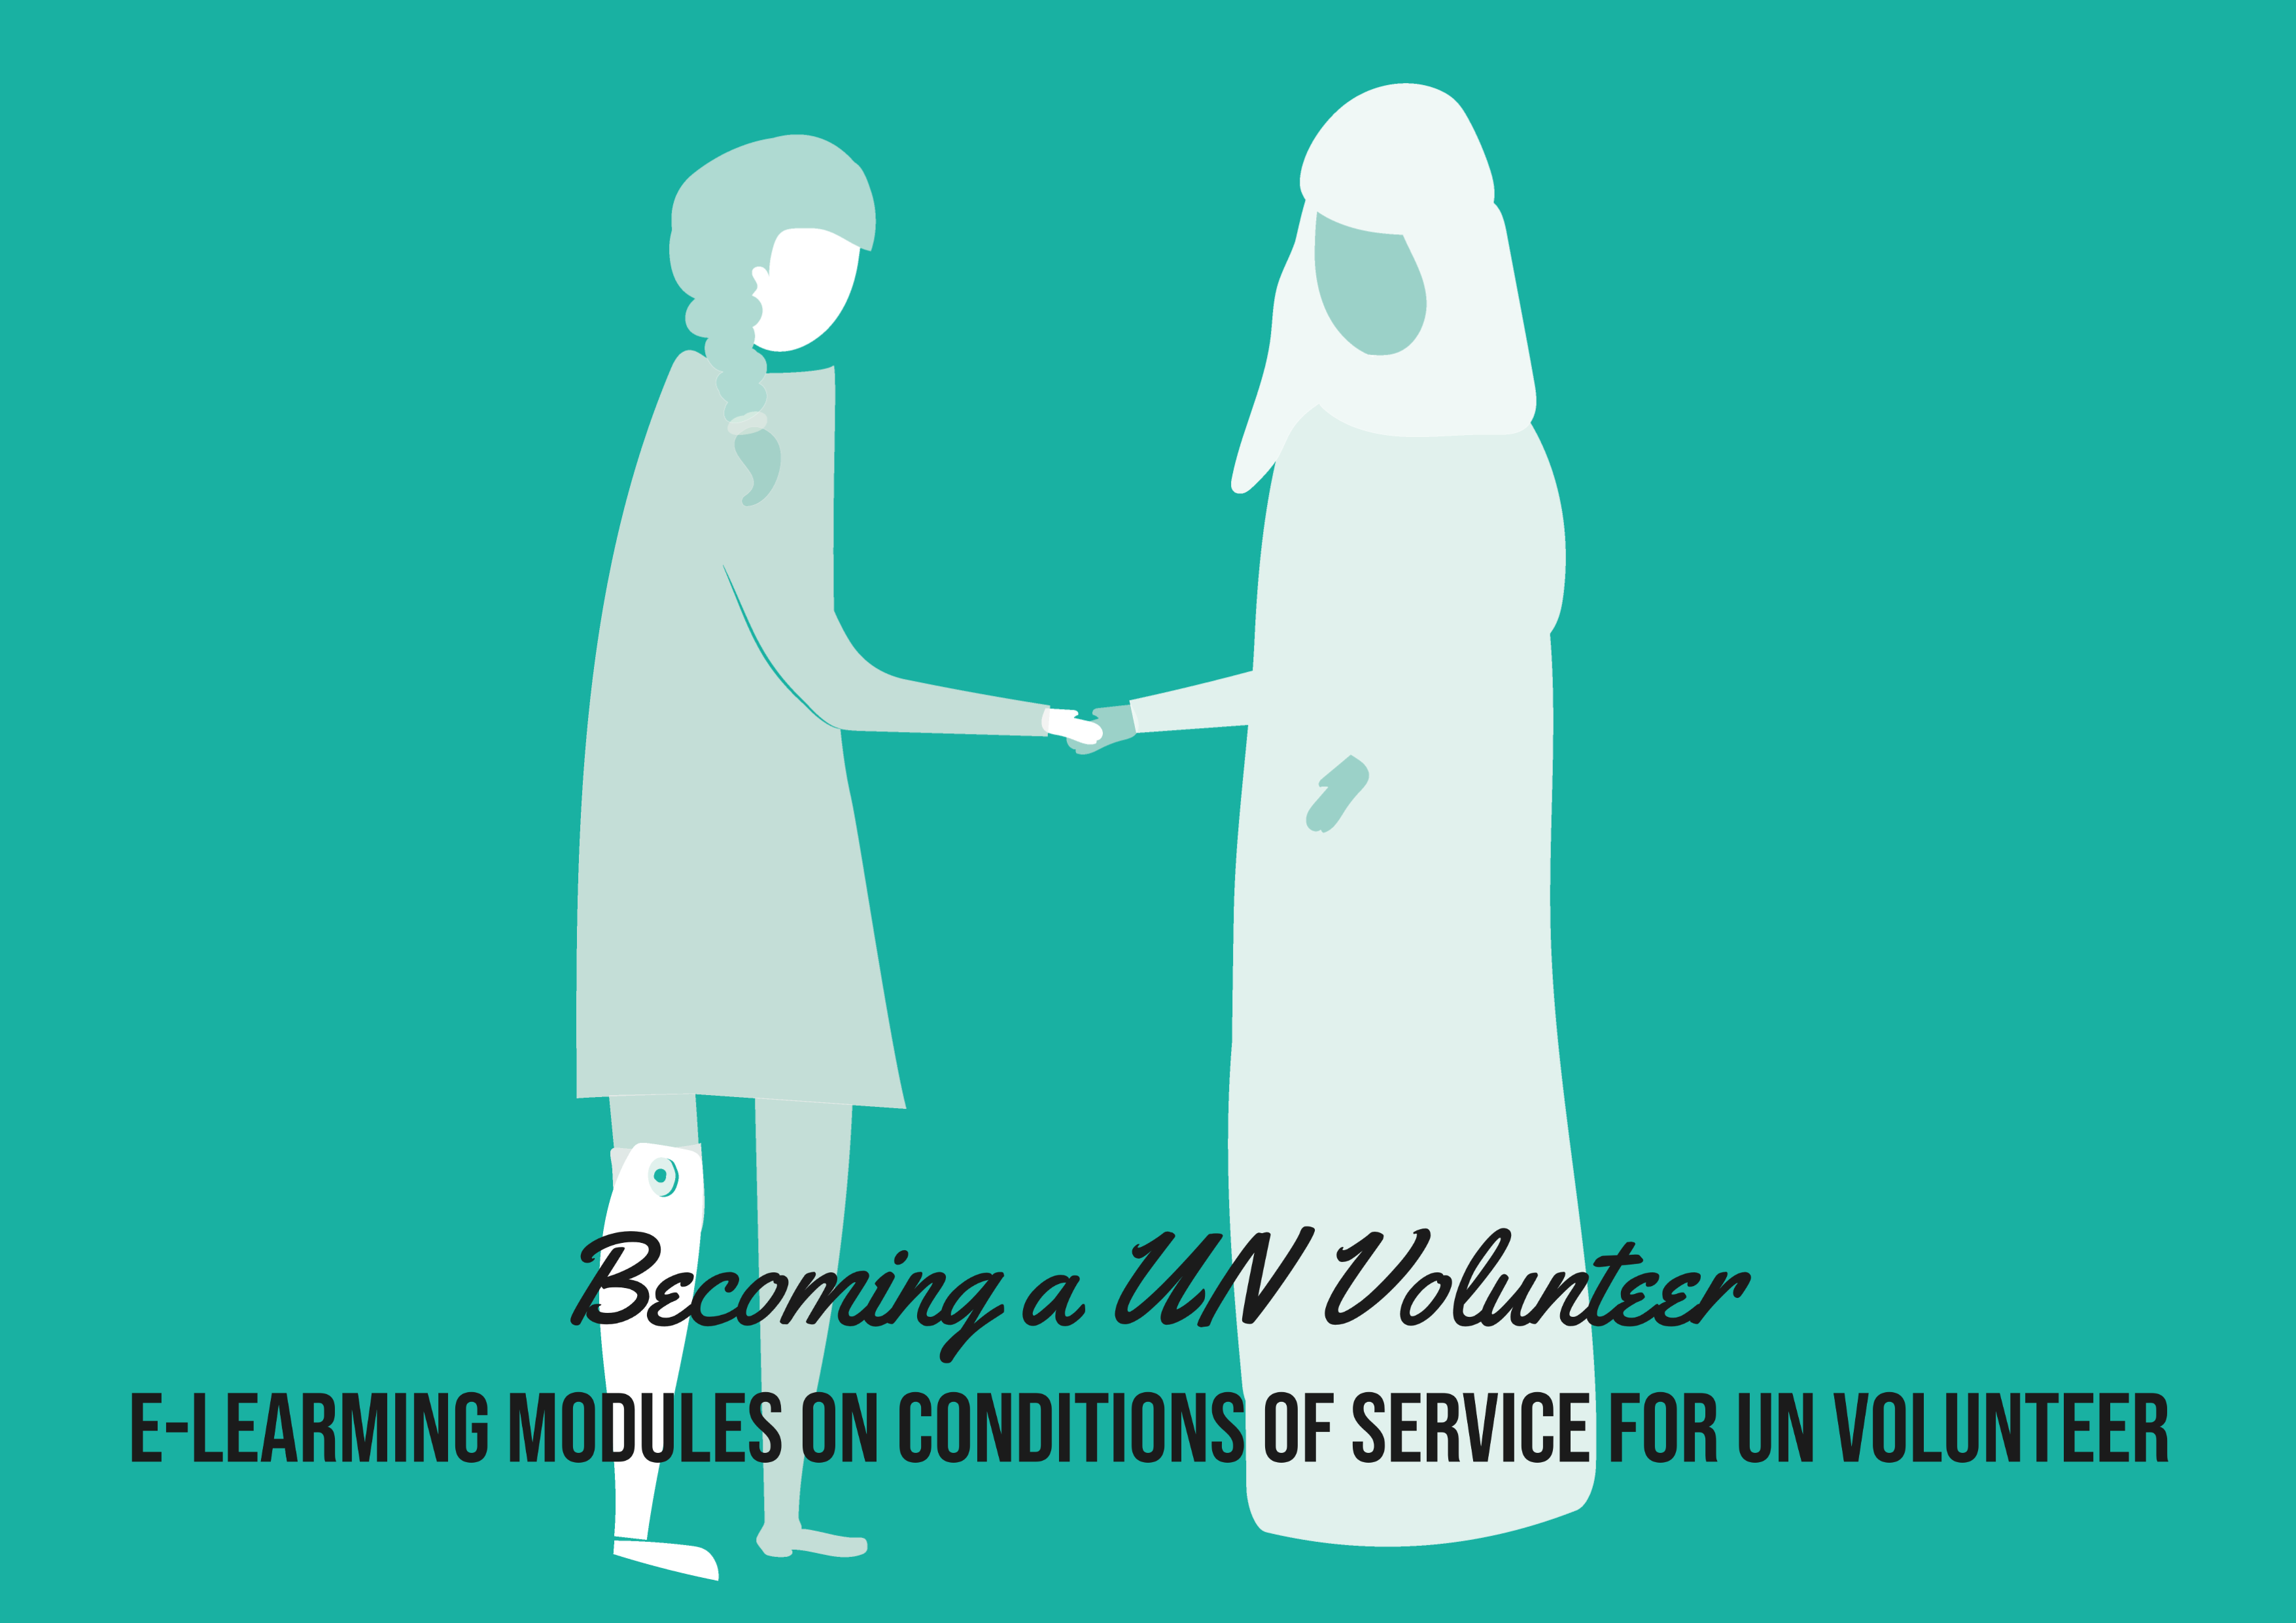 Becoming a UN Volunteer course